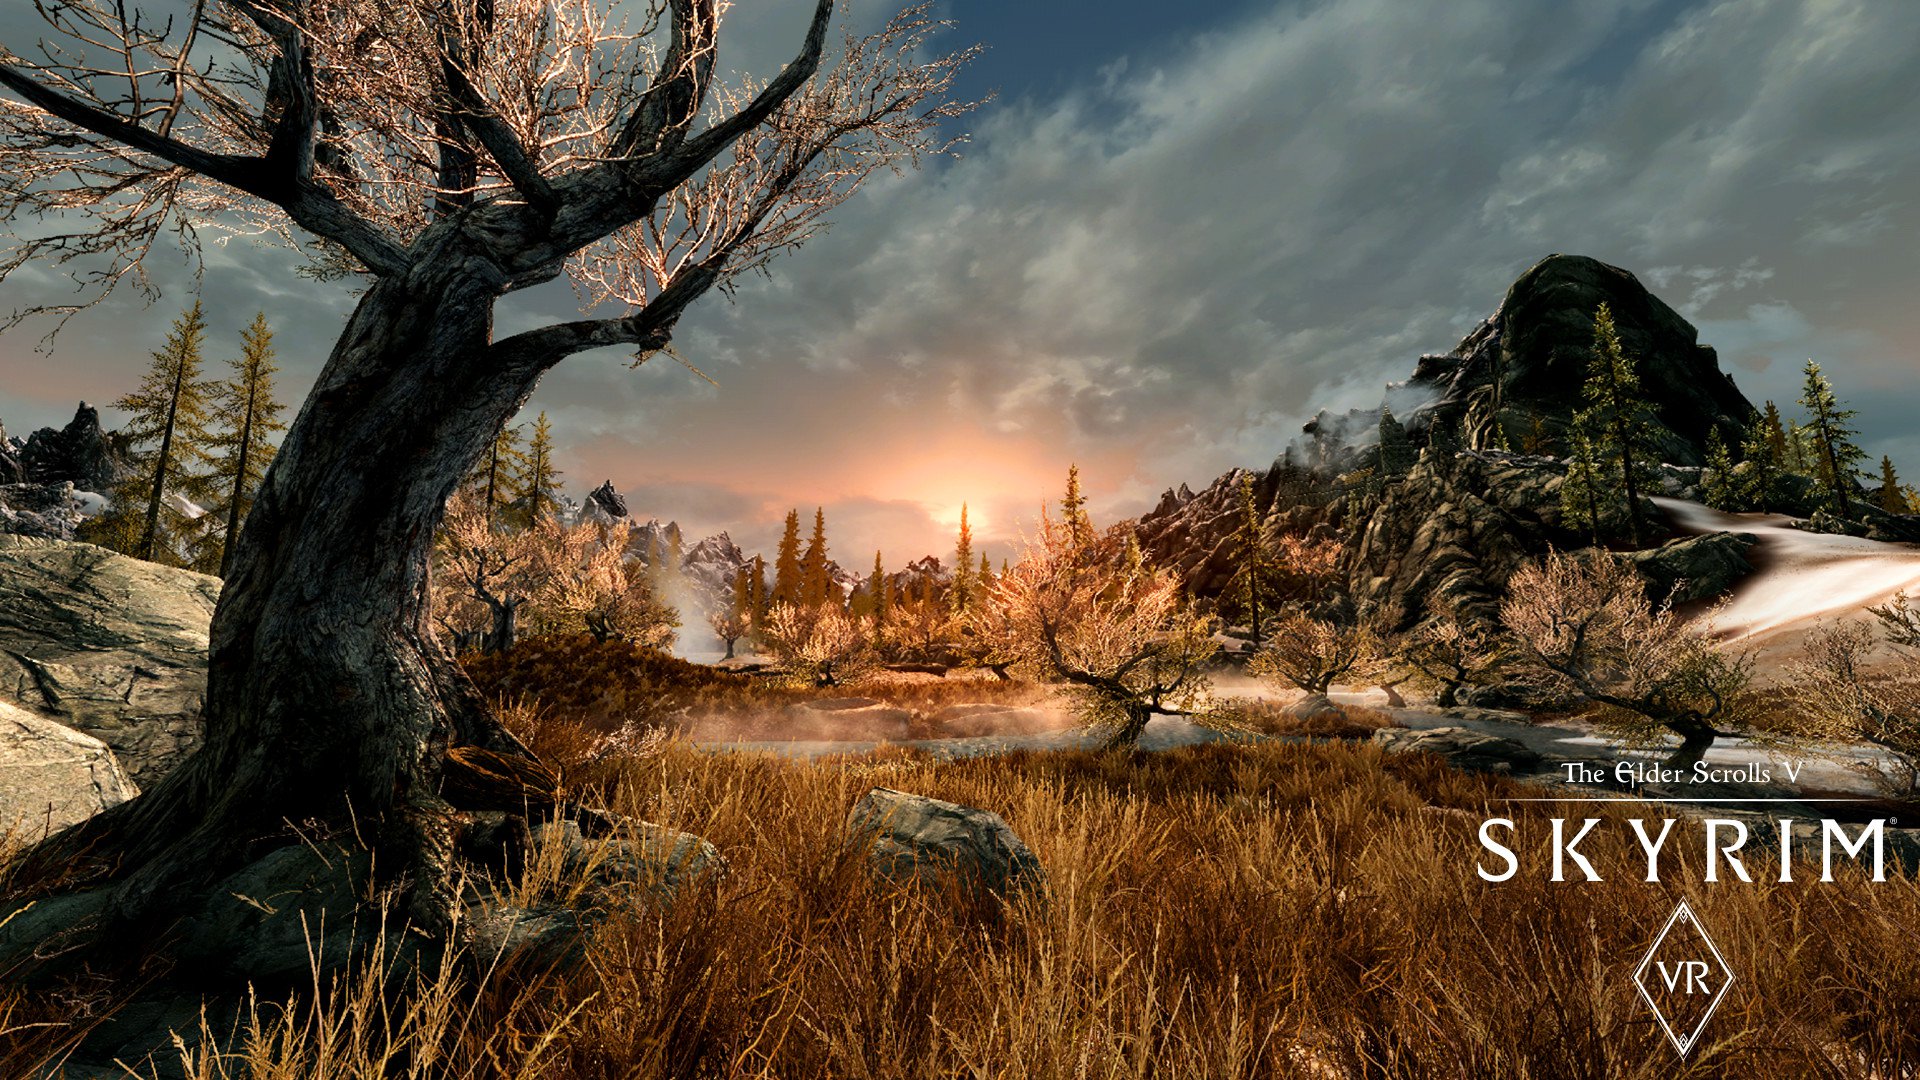 The Elder Scrolls V Skyrim VR 1